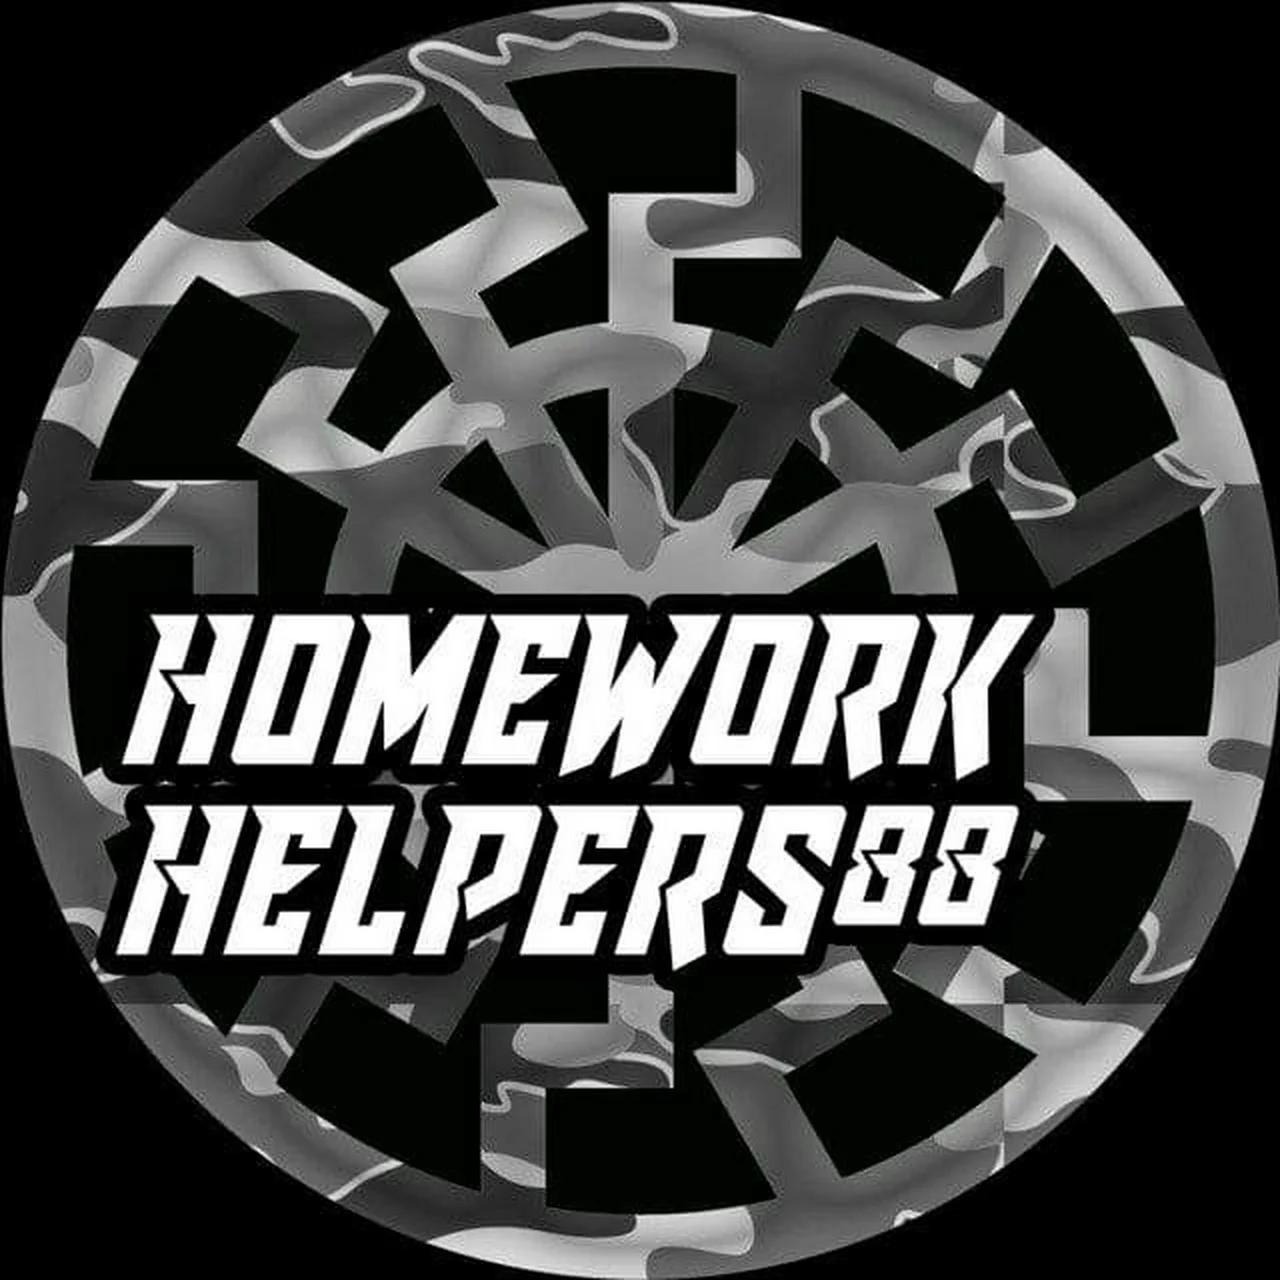 homework 88 t4